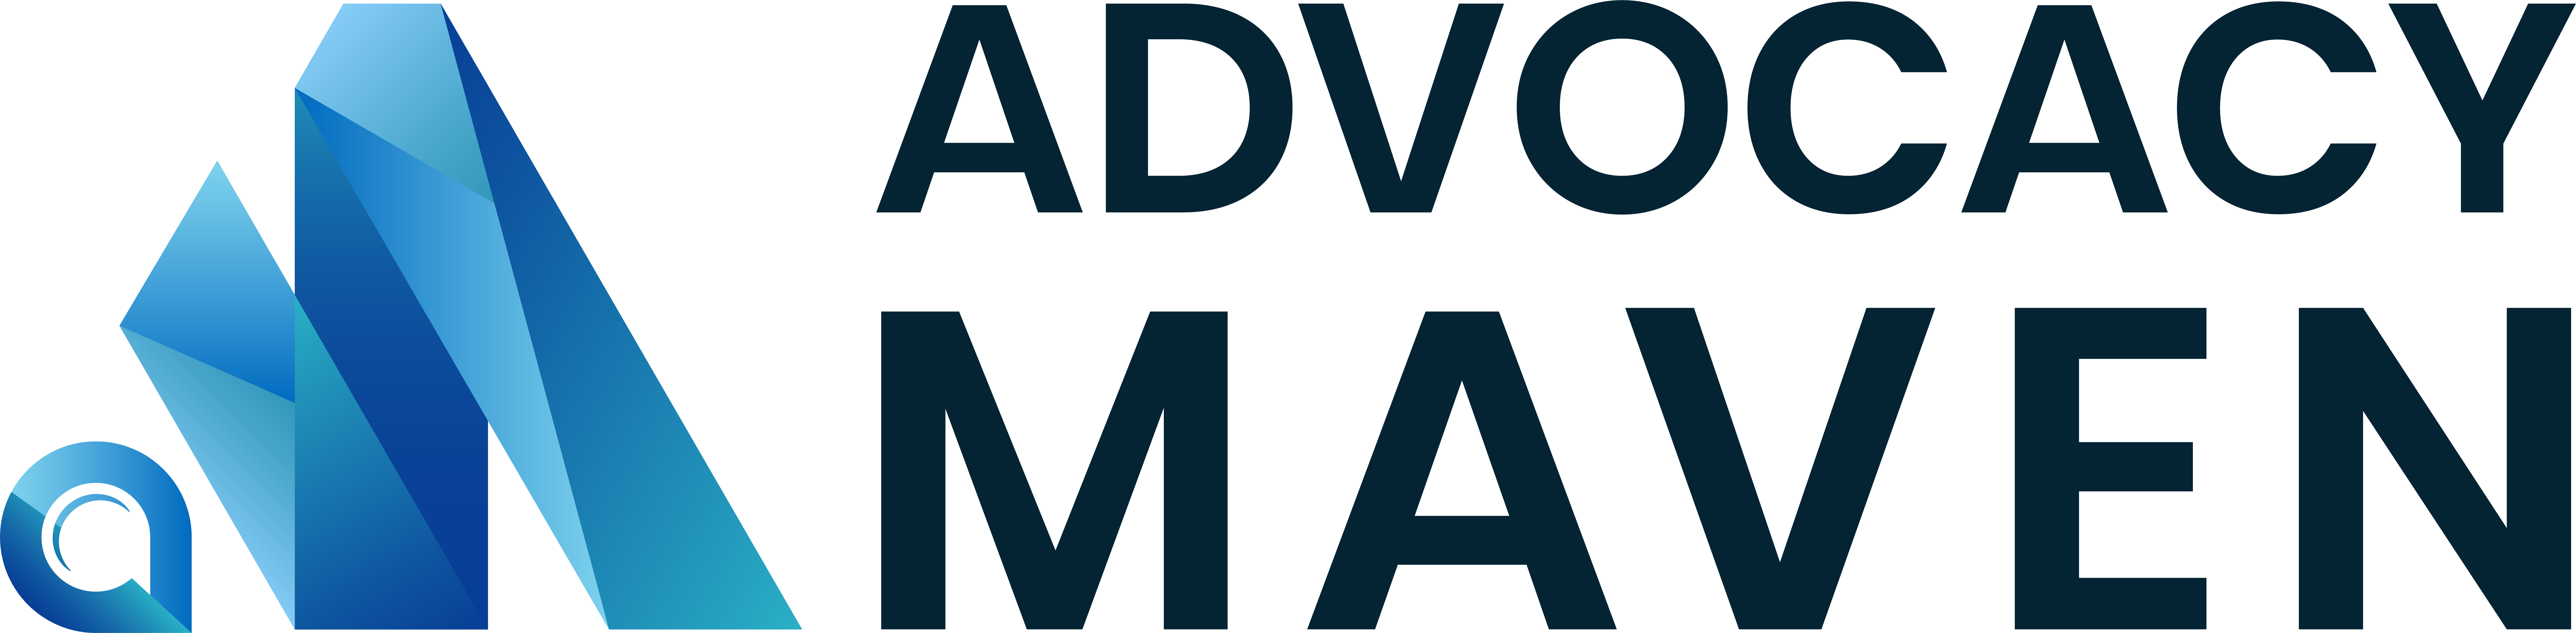 Advocacy Maven logo - Influitive Partner